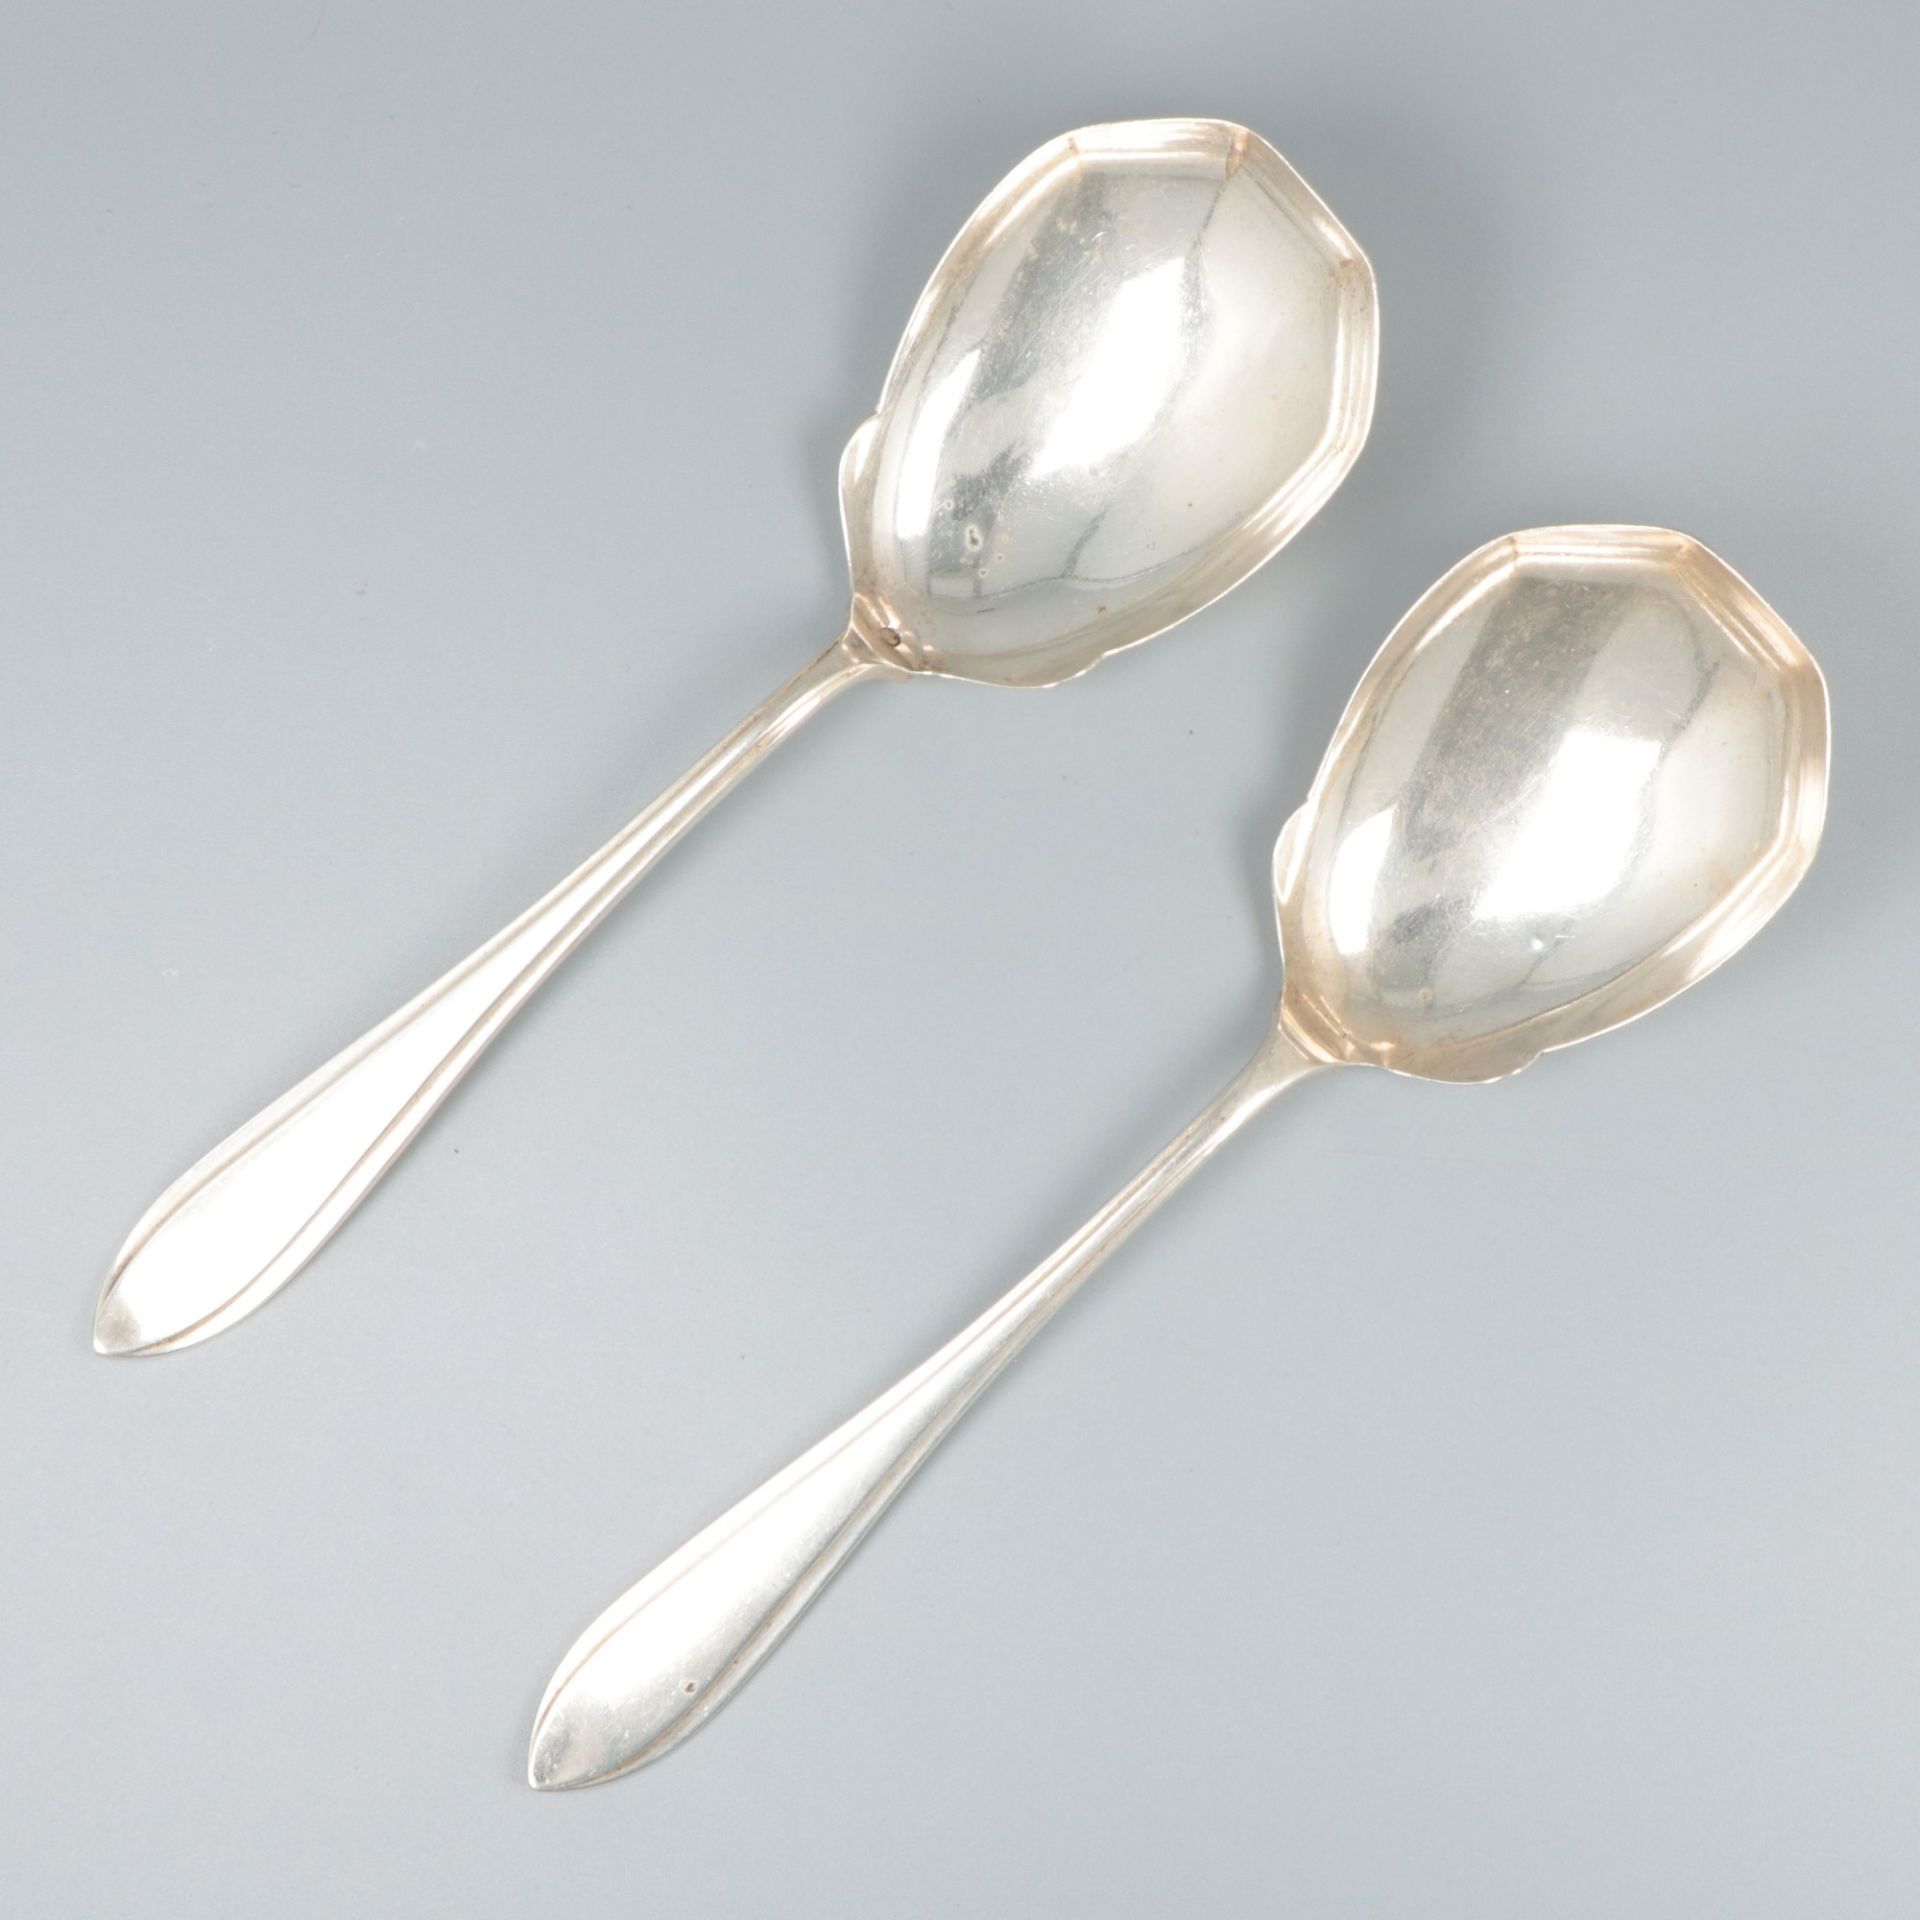 2-piece set of potato spoons silver.